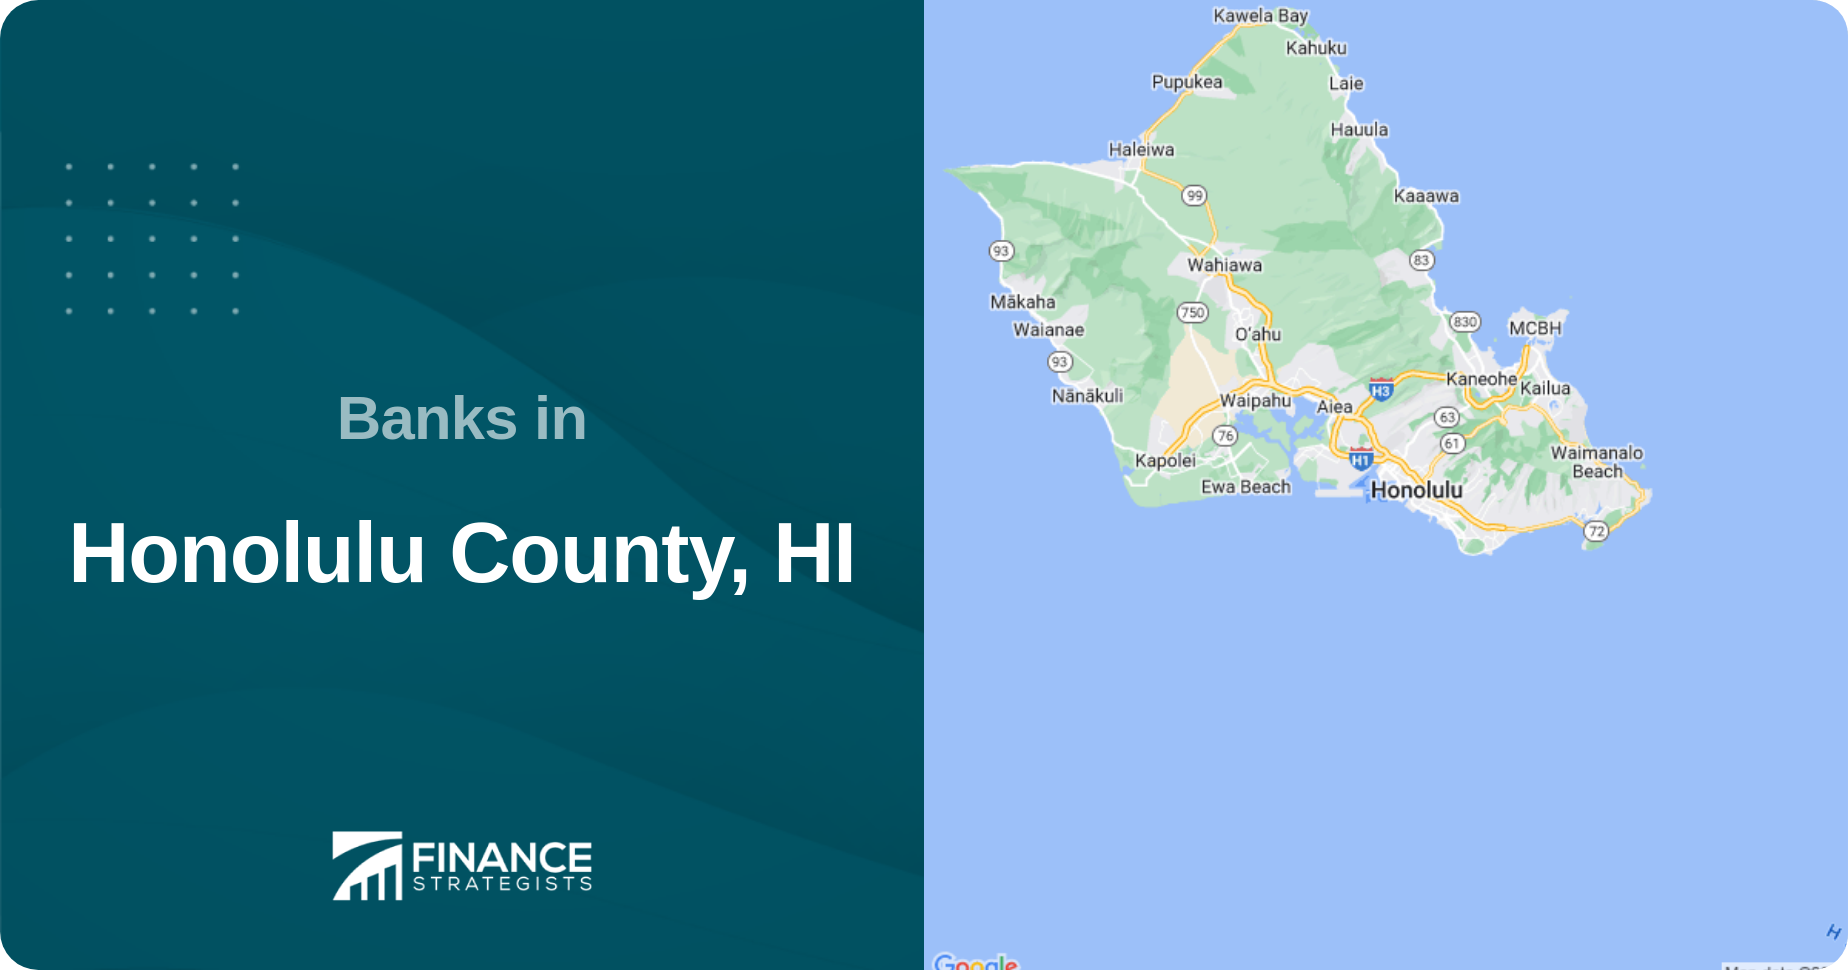 Banks in Honolulu County, HI